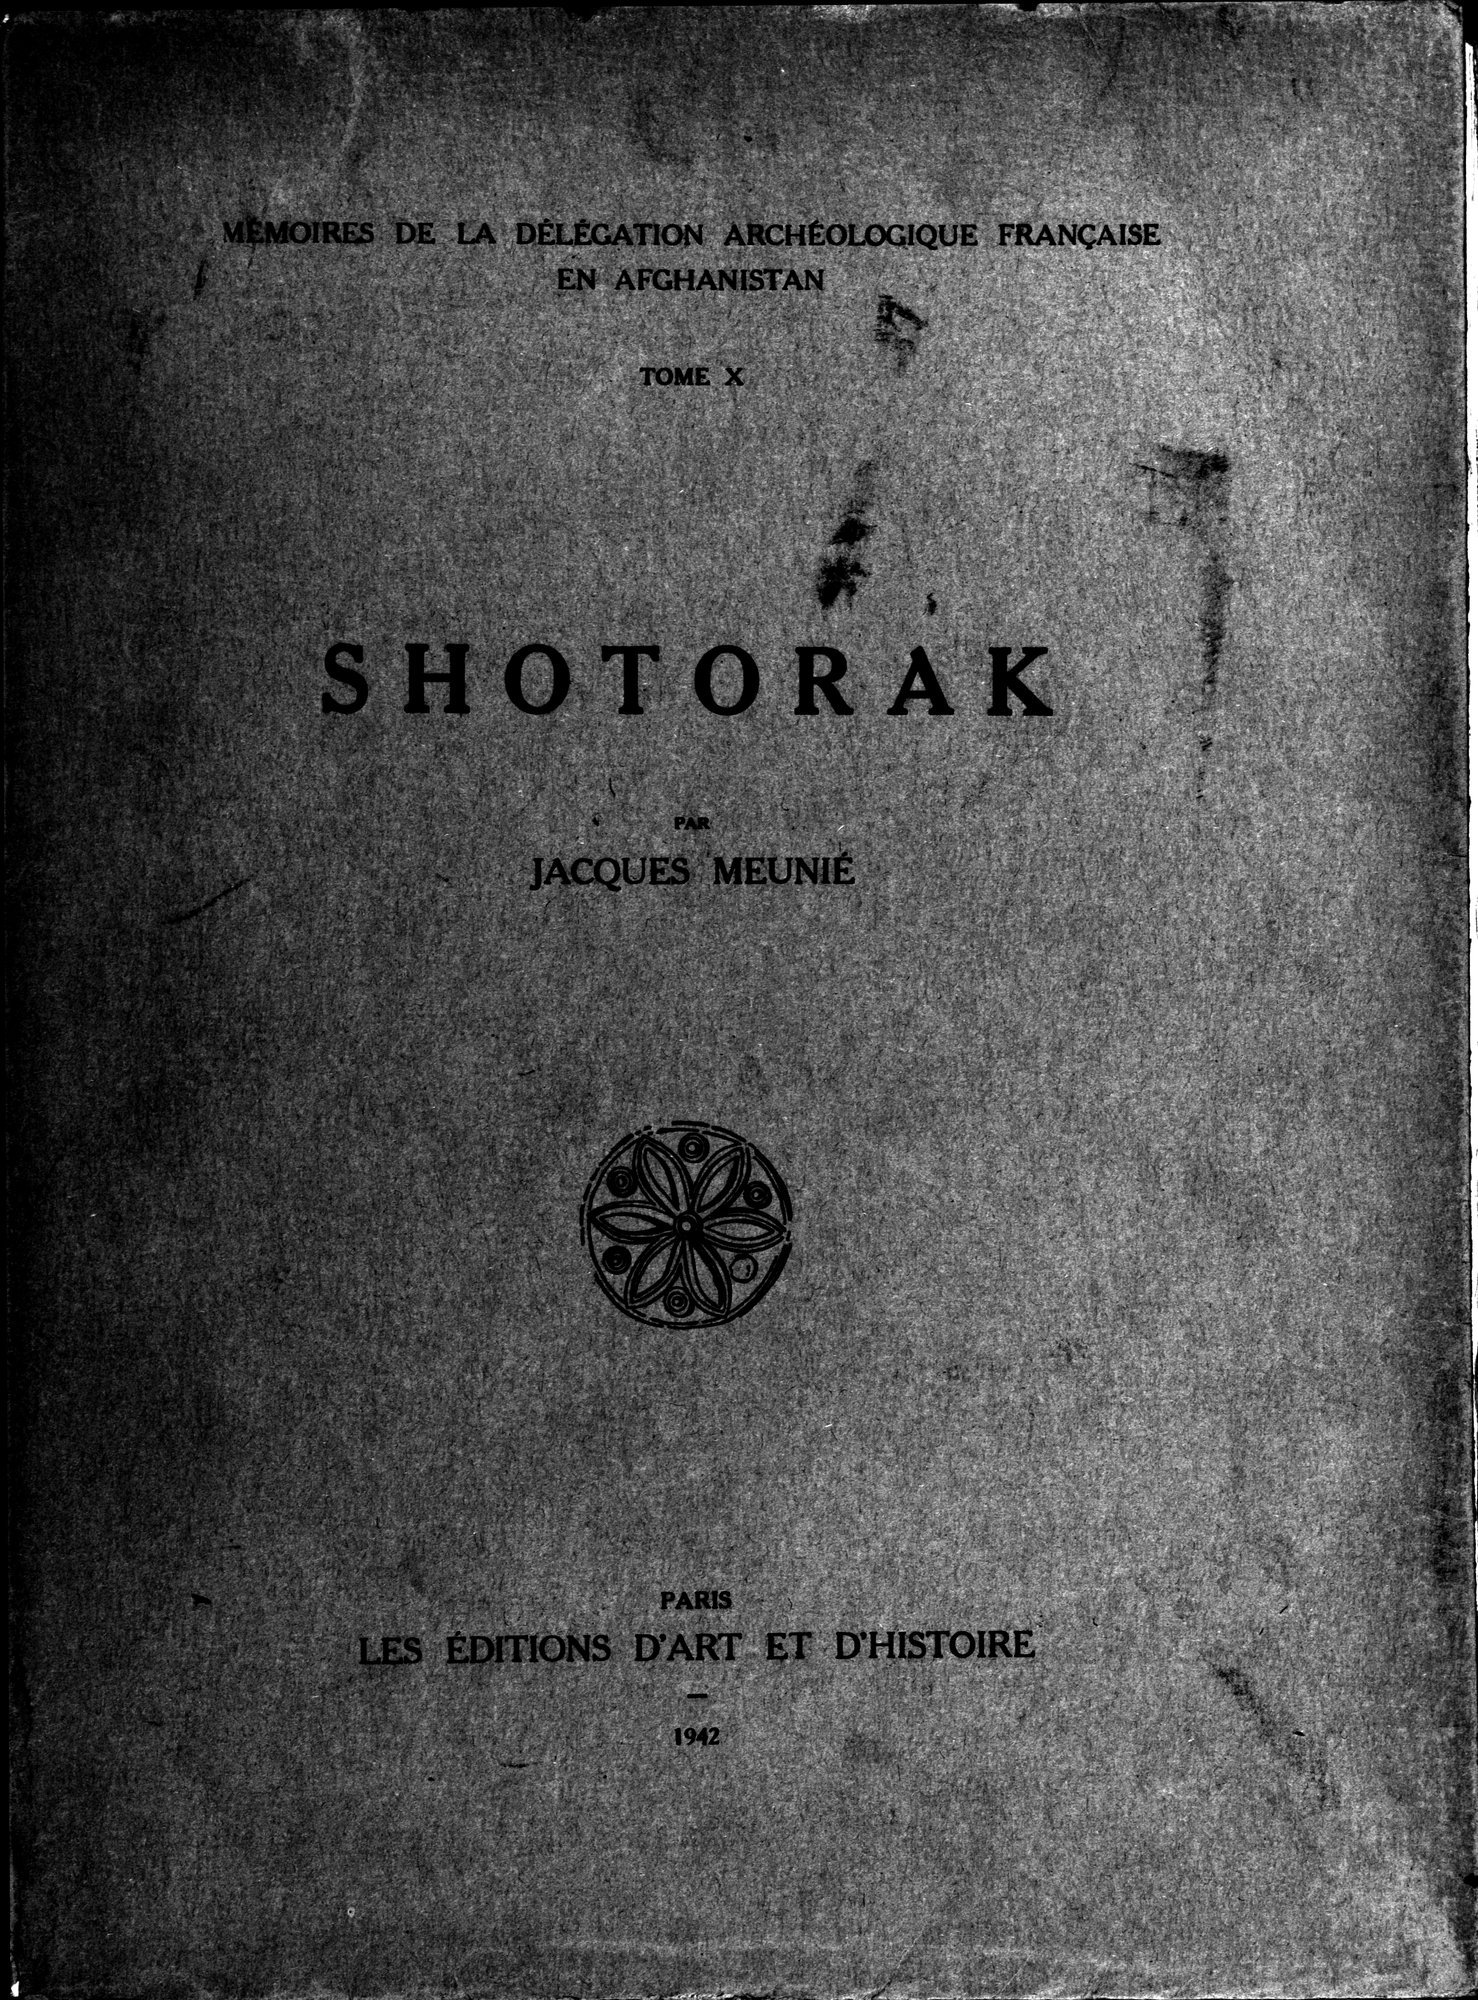 Shotorak : vol.1 / Page 1 (Grayscale High Resolution Image)